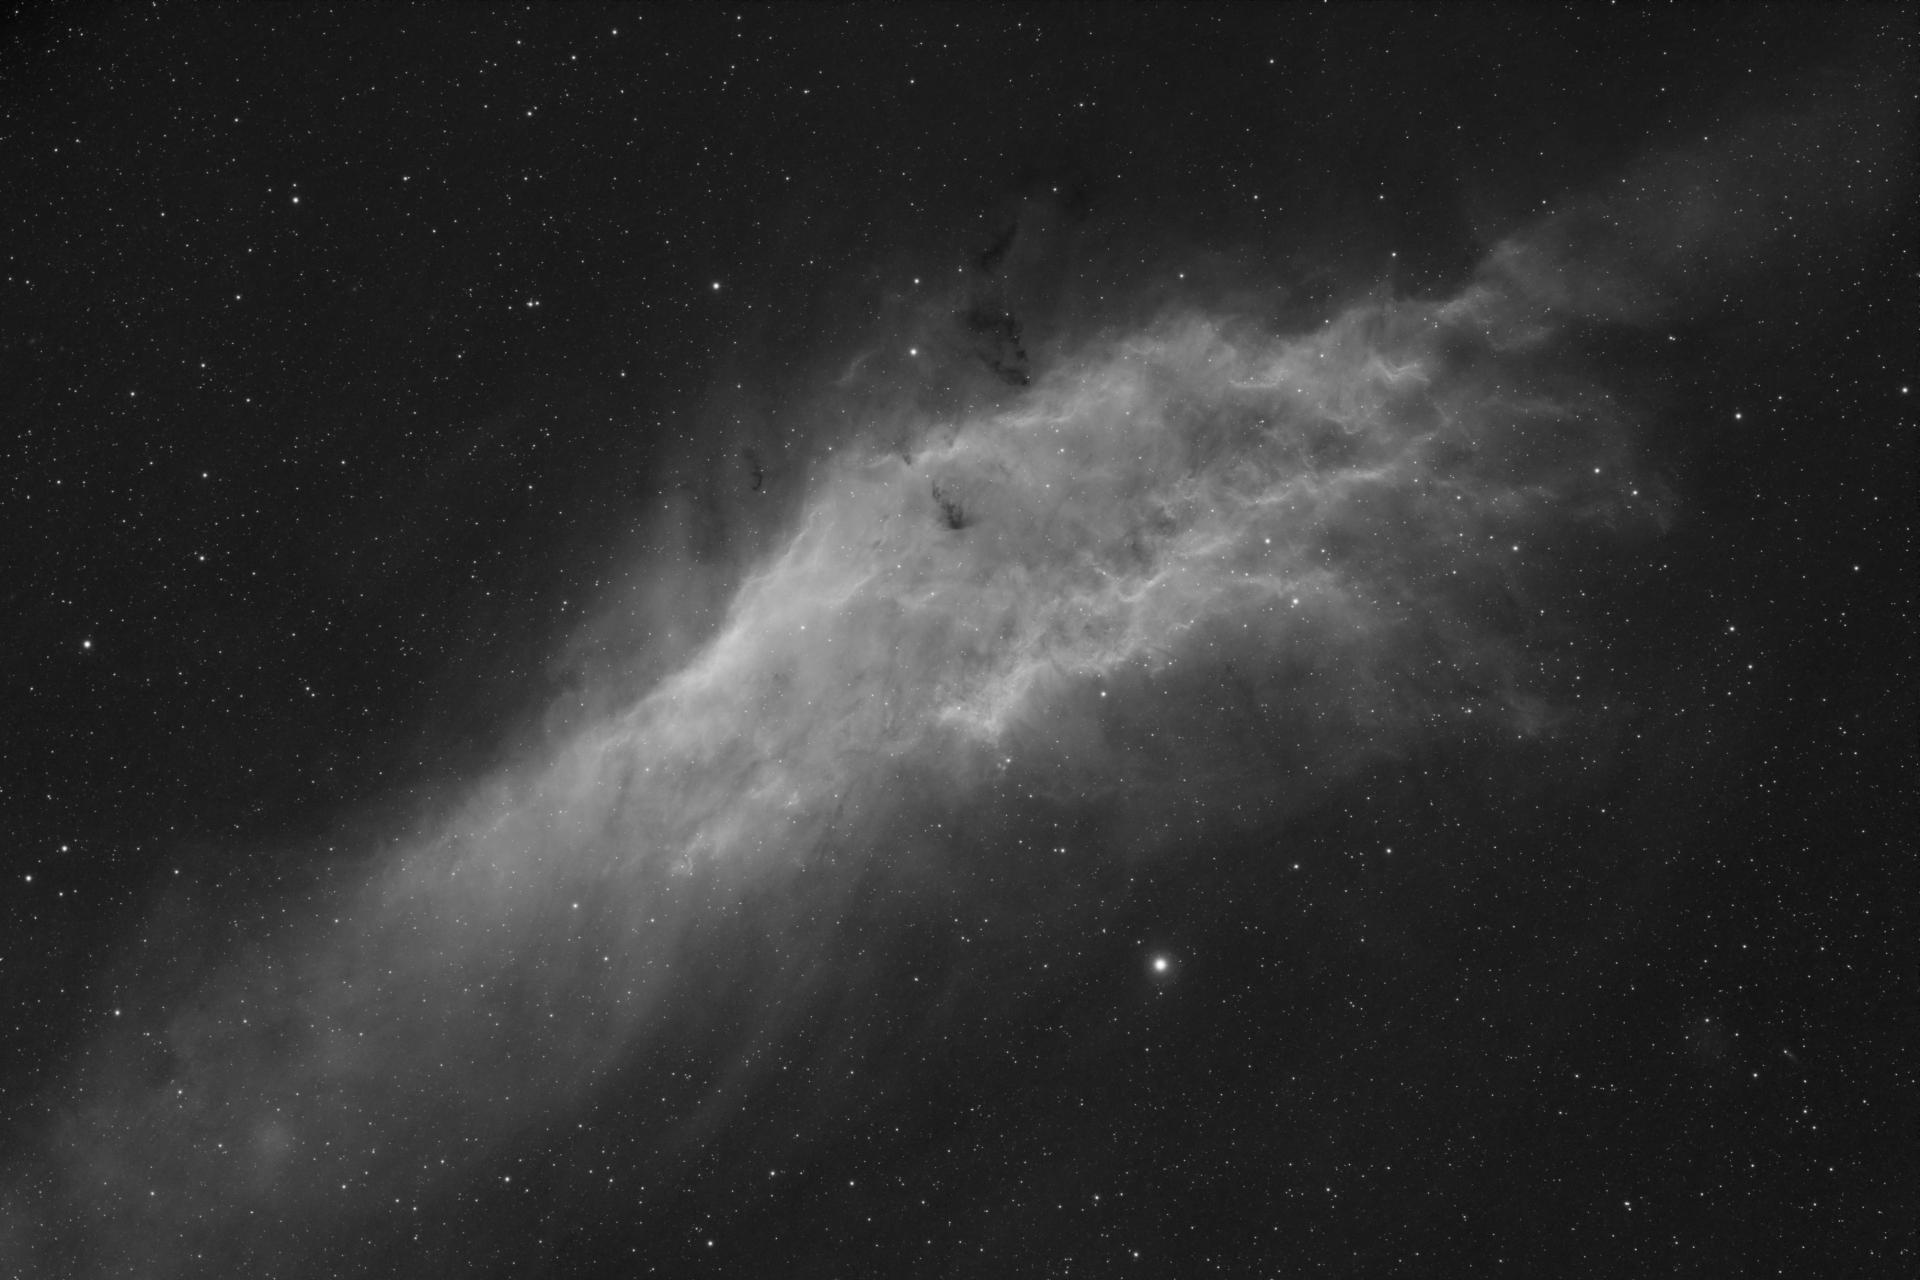 NGC1499-H-Alpha.jpg